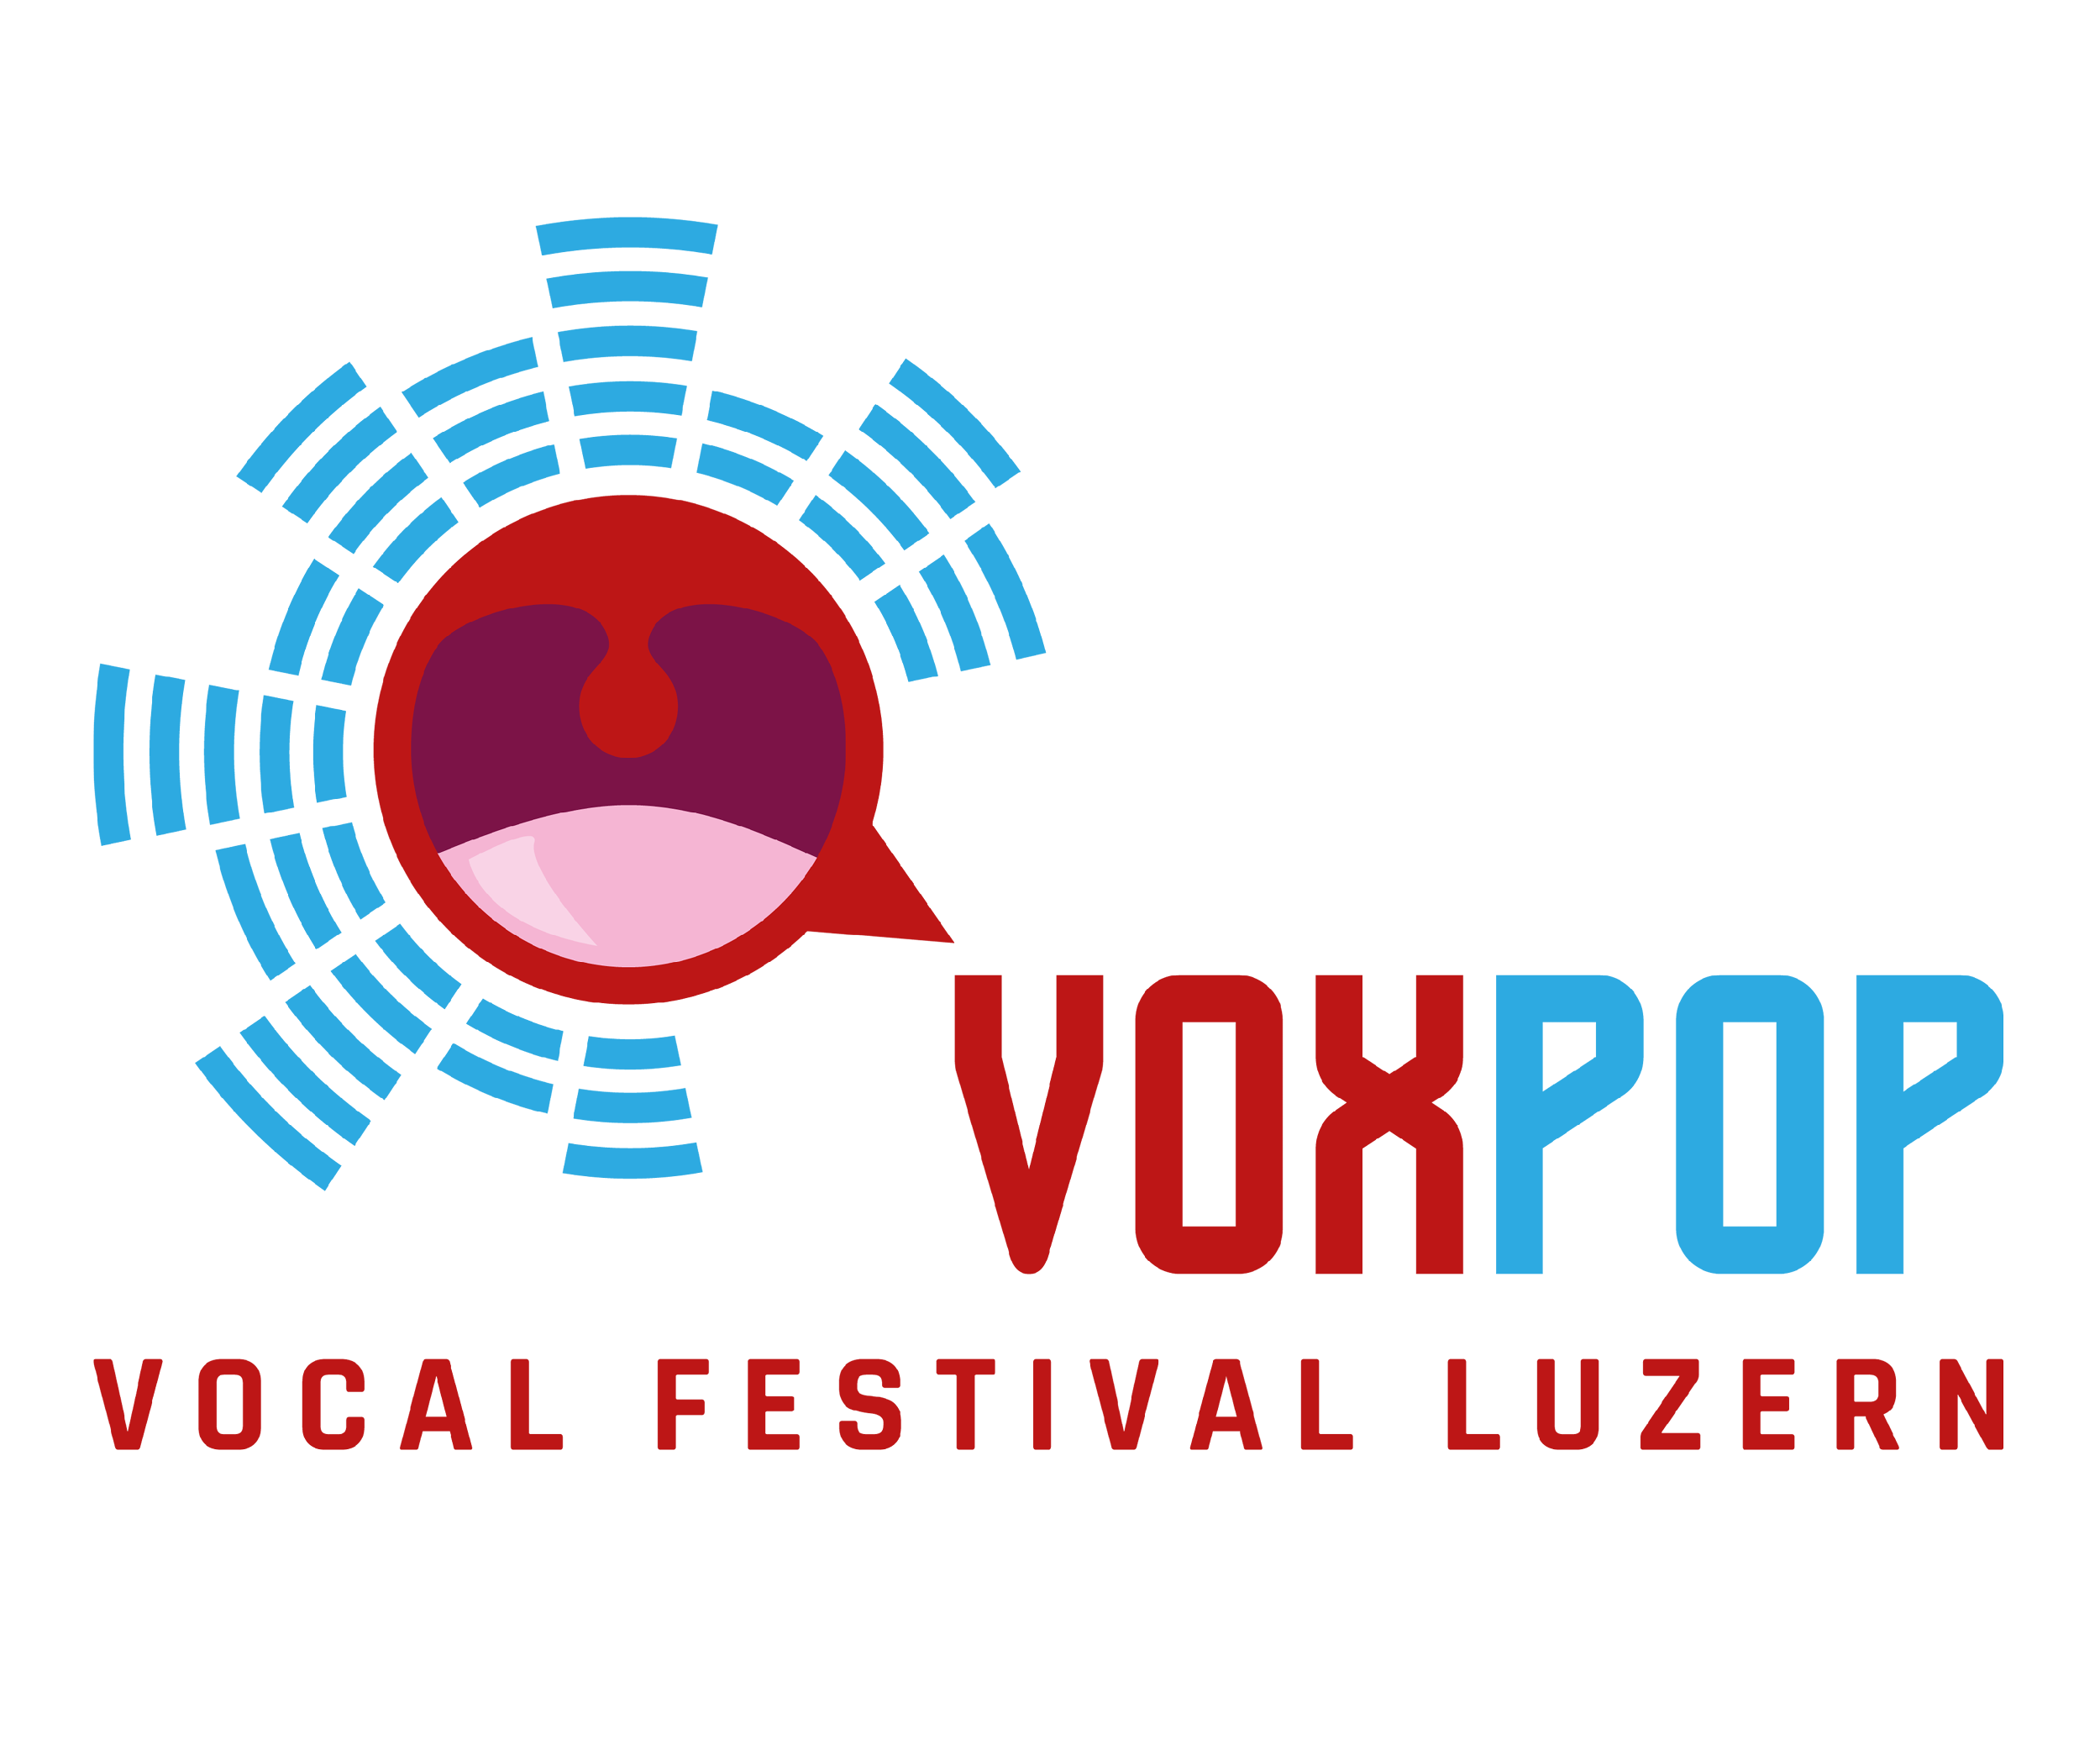 VOXPOP Vocal Festival Luzern